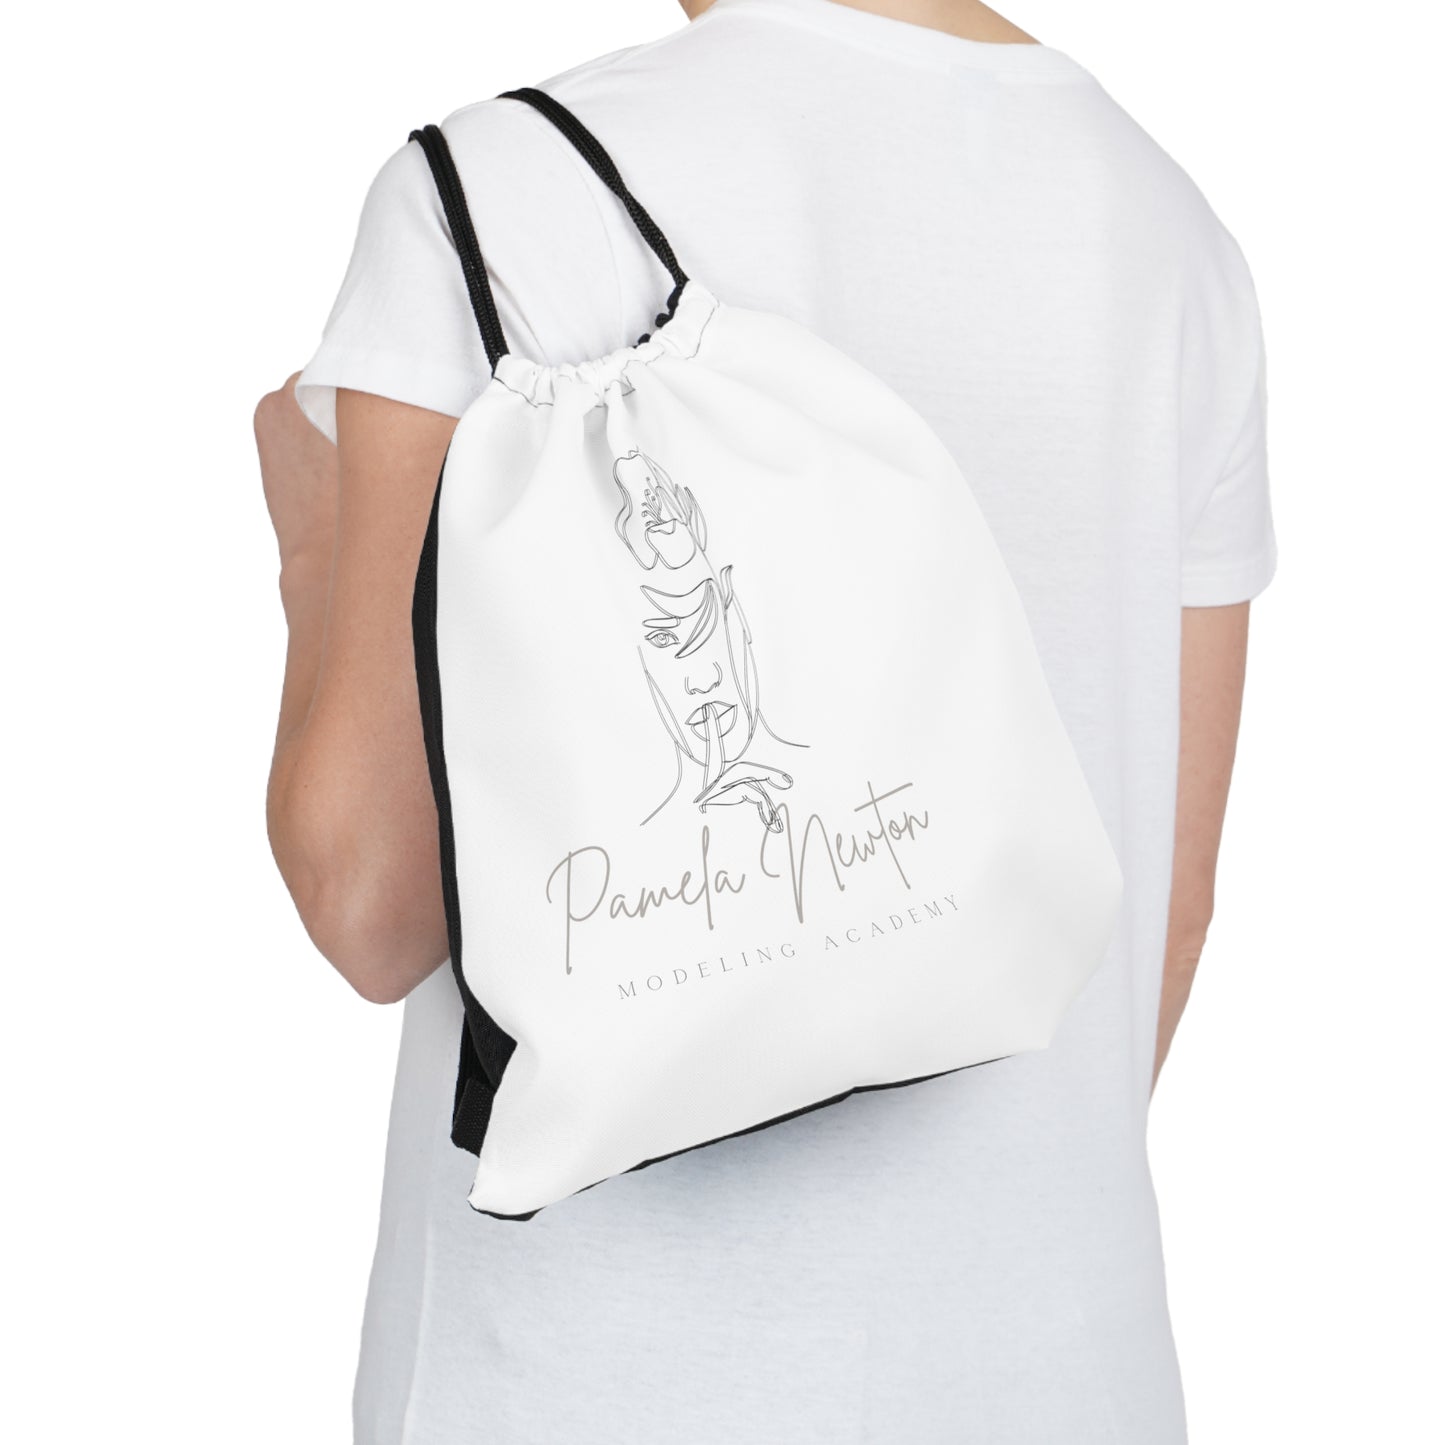 Pamela Newton Modeling Academy  Outdoor Drawstring Bag